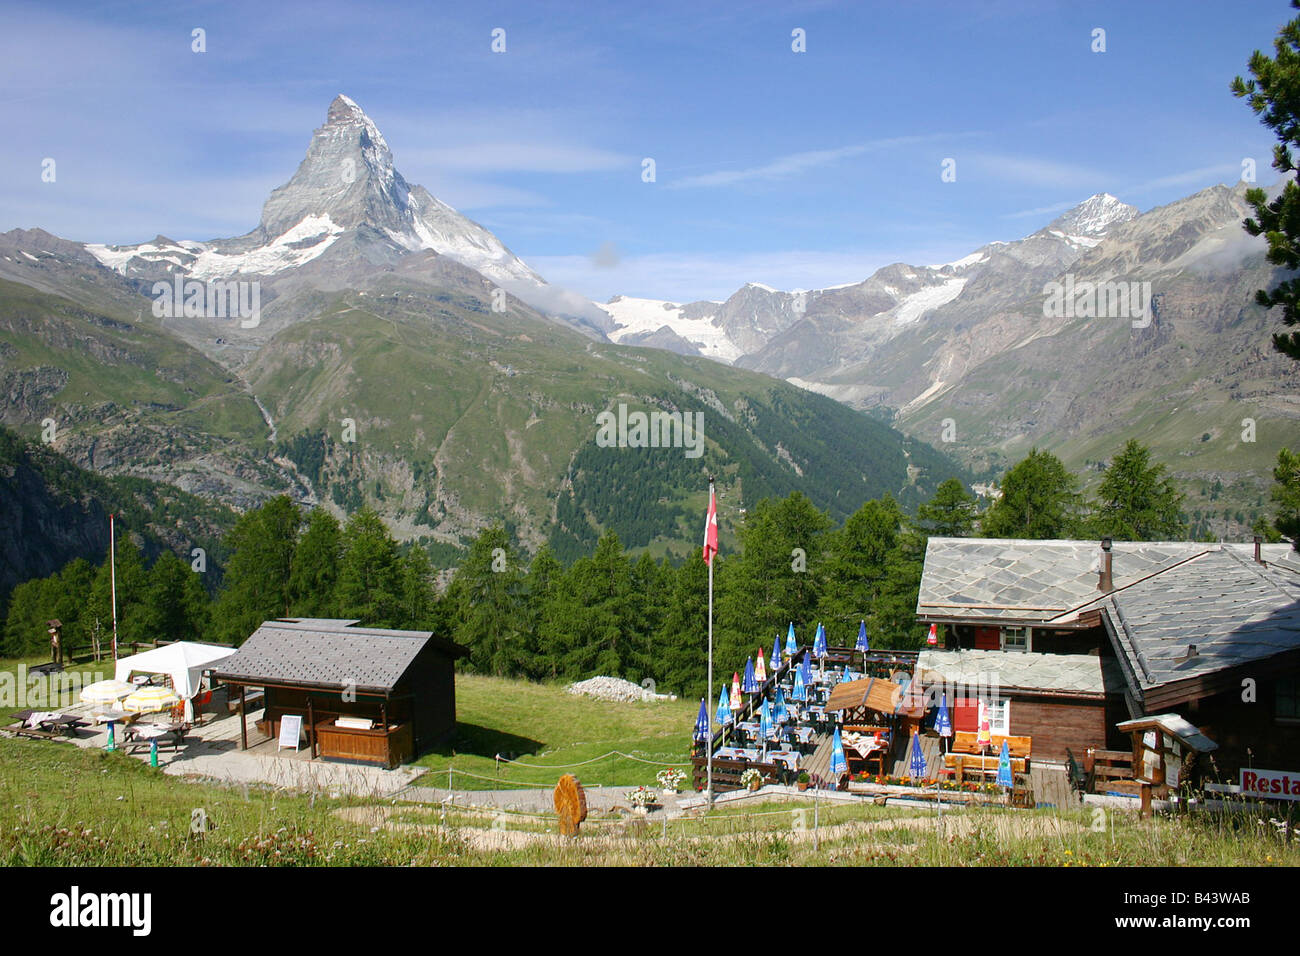 Svizzera - Cervino montagna delle Alpi Foto Stock